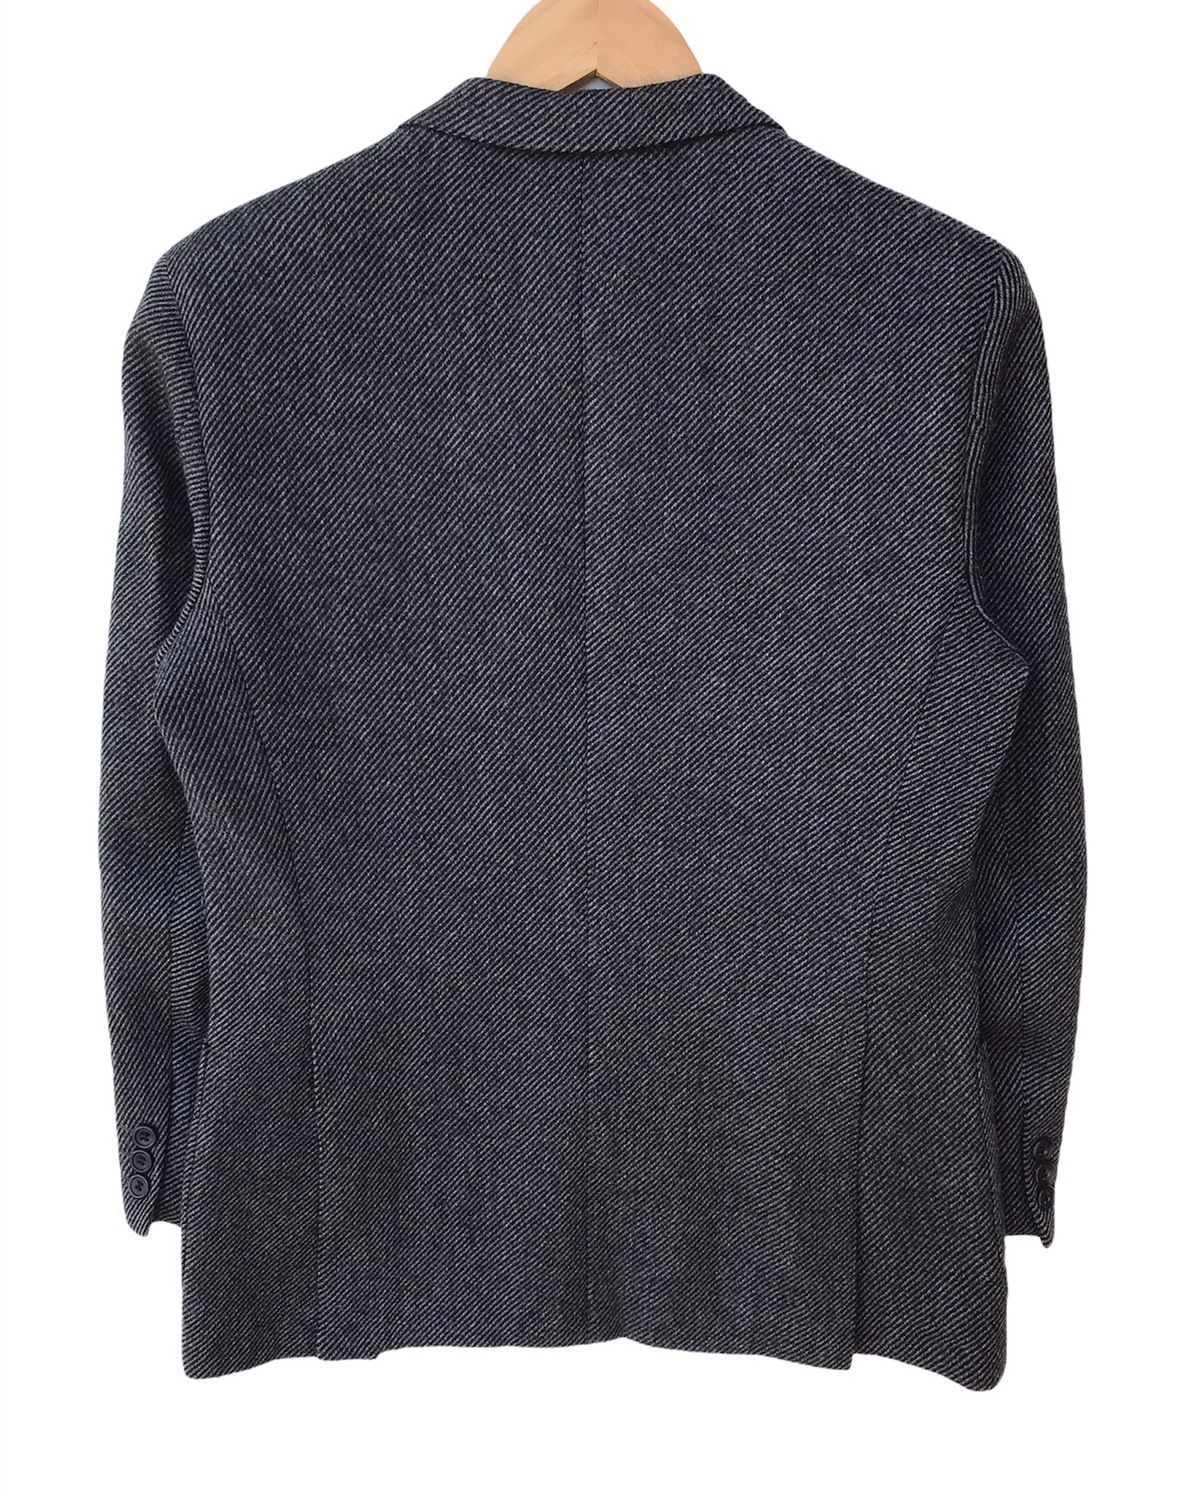 🔥NEED GONE🔥 Balenciaga Paris Wool Suit Jacket - 2